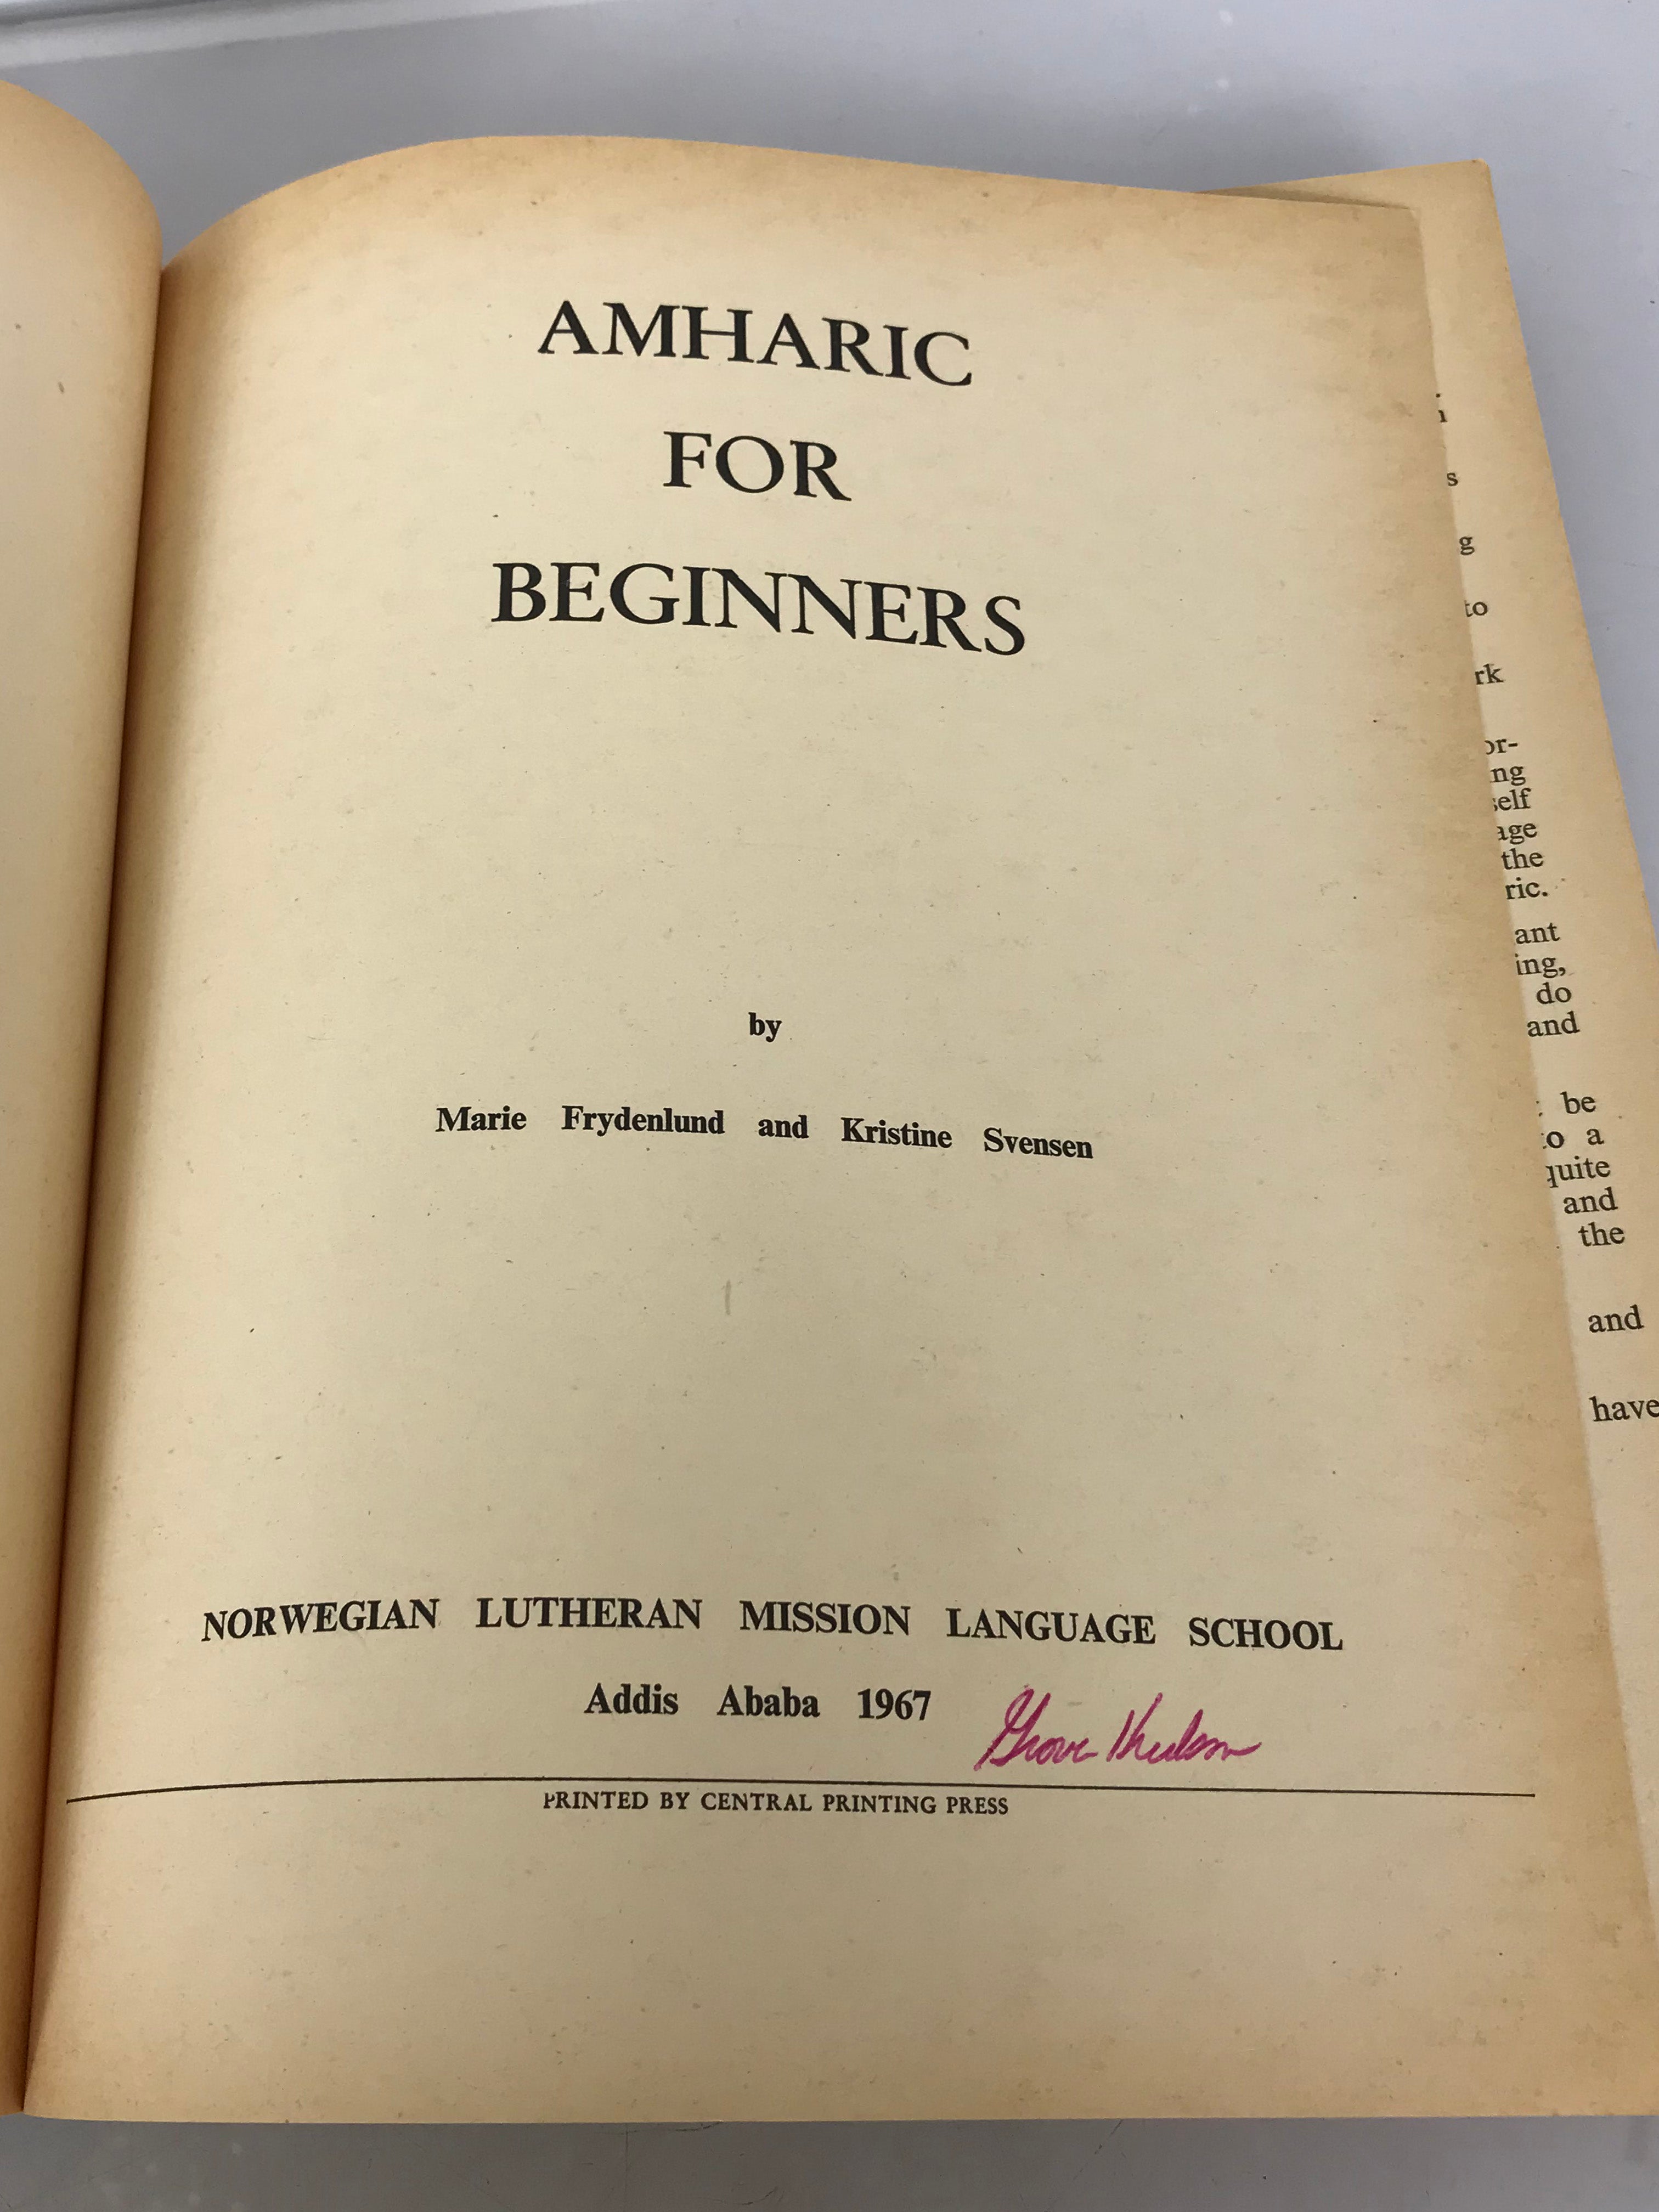 Amharic for Beginners by Frydenlund & Svenson 1967